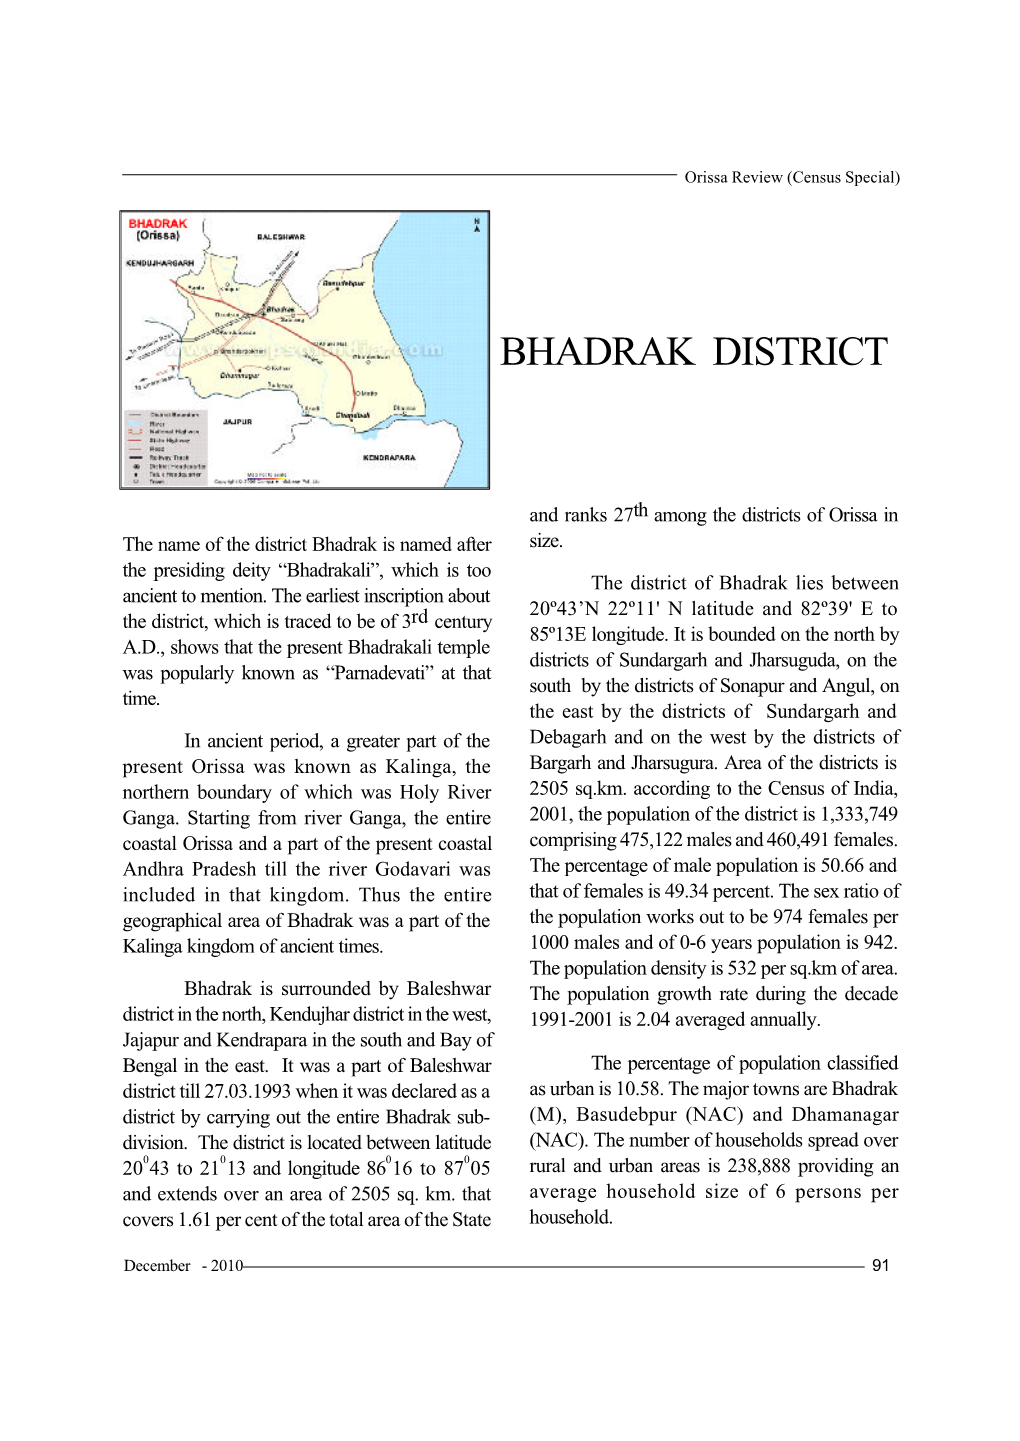 Bhadrak District